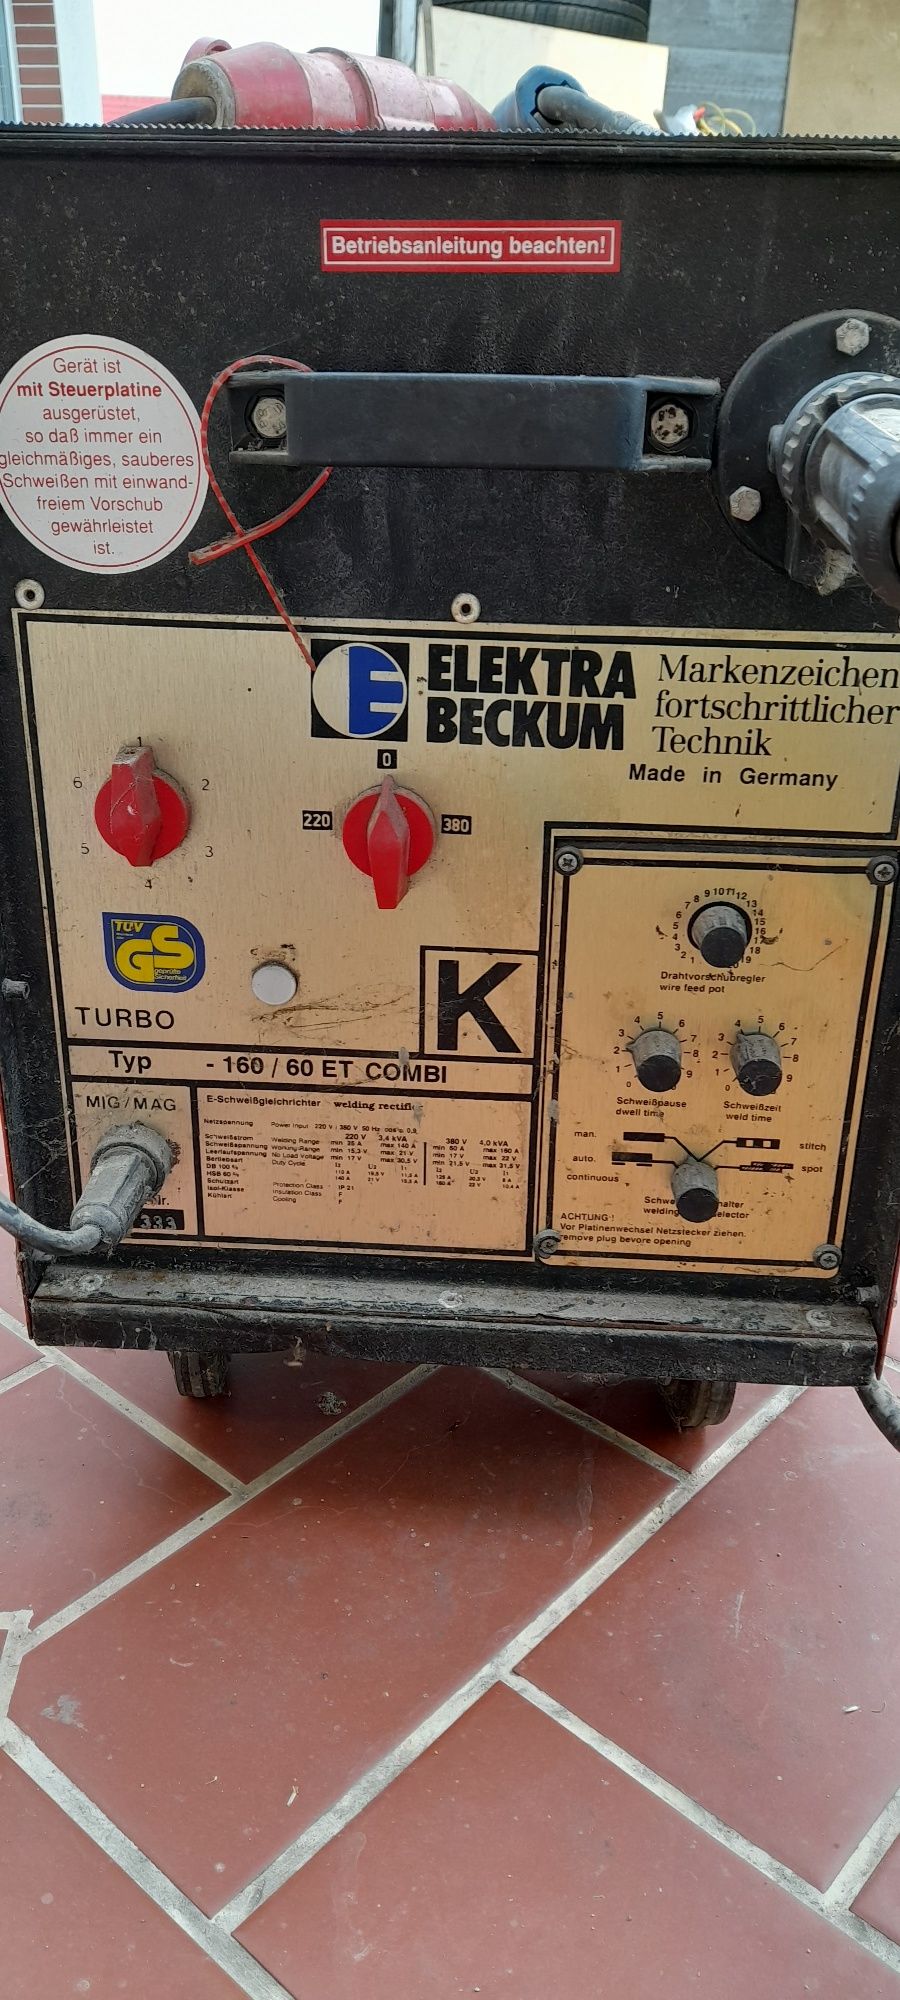 Elektra Beckum -160/60 ET Combi